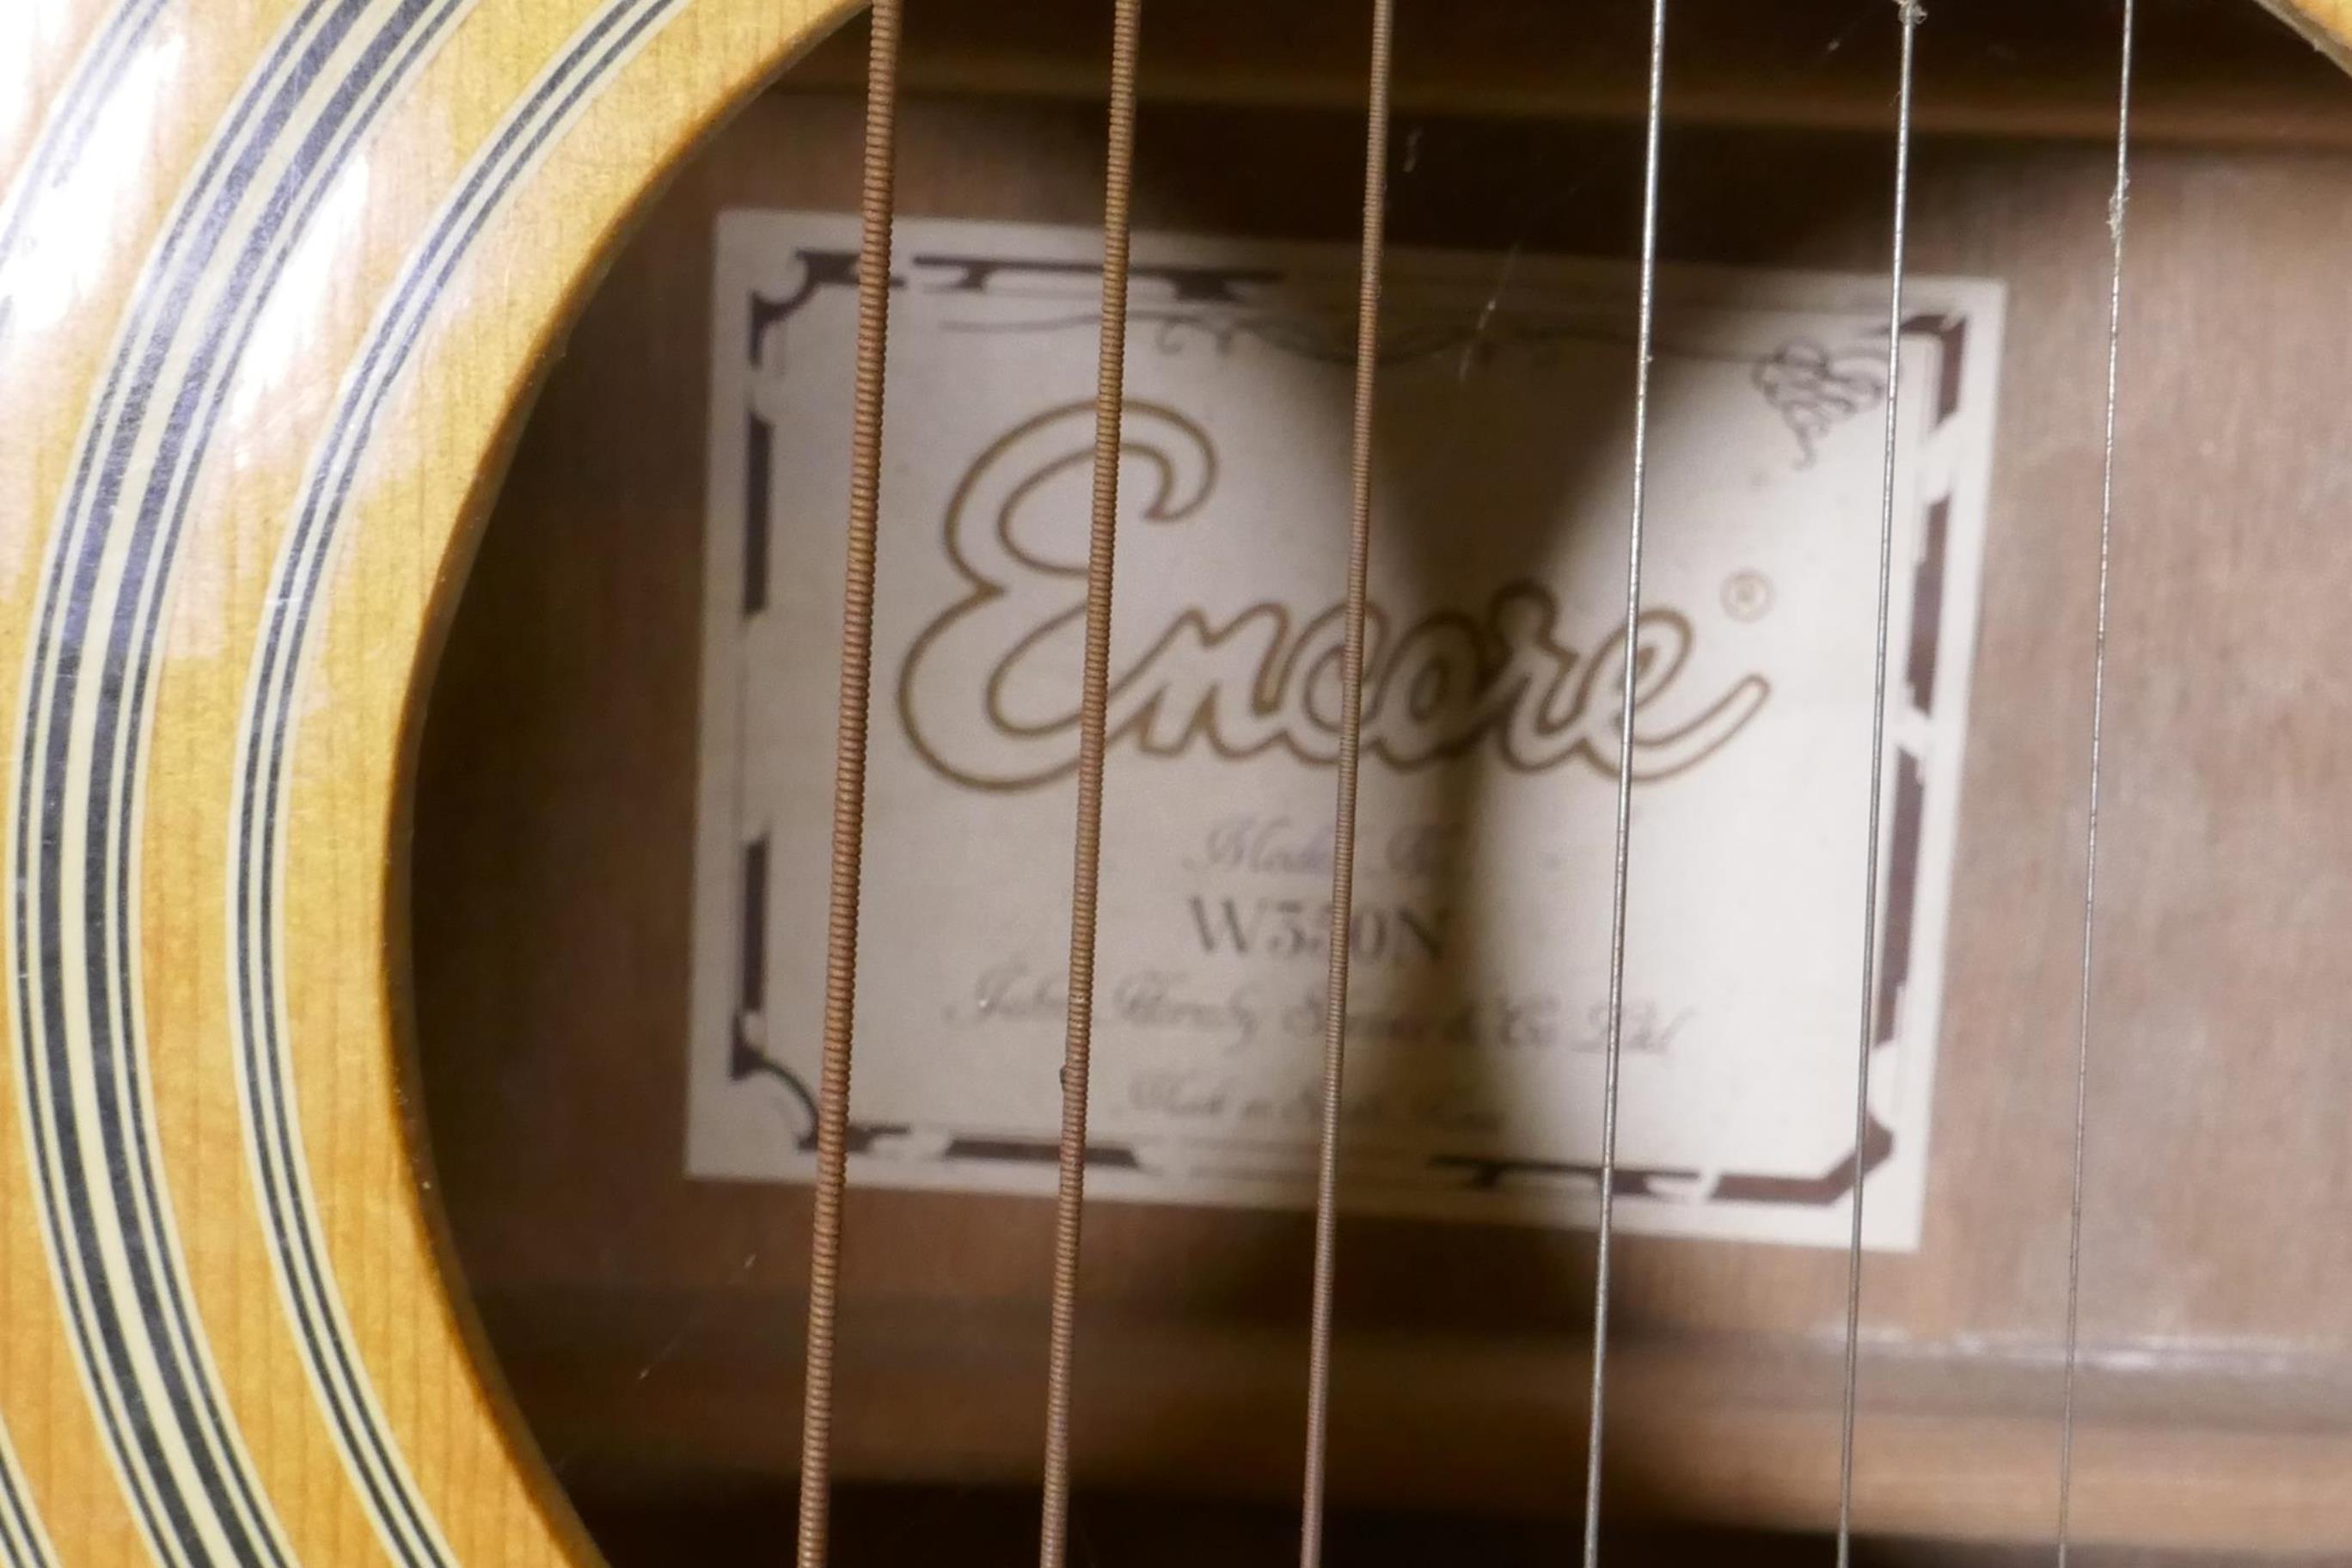 Encore model No W350N acoustic guitar by John Hornby Sheives & Co Ltd - Image 3 of 4